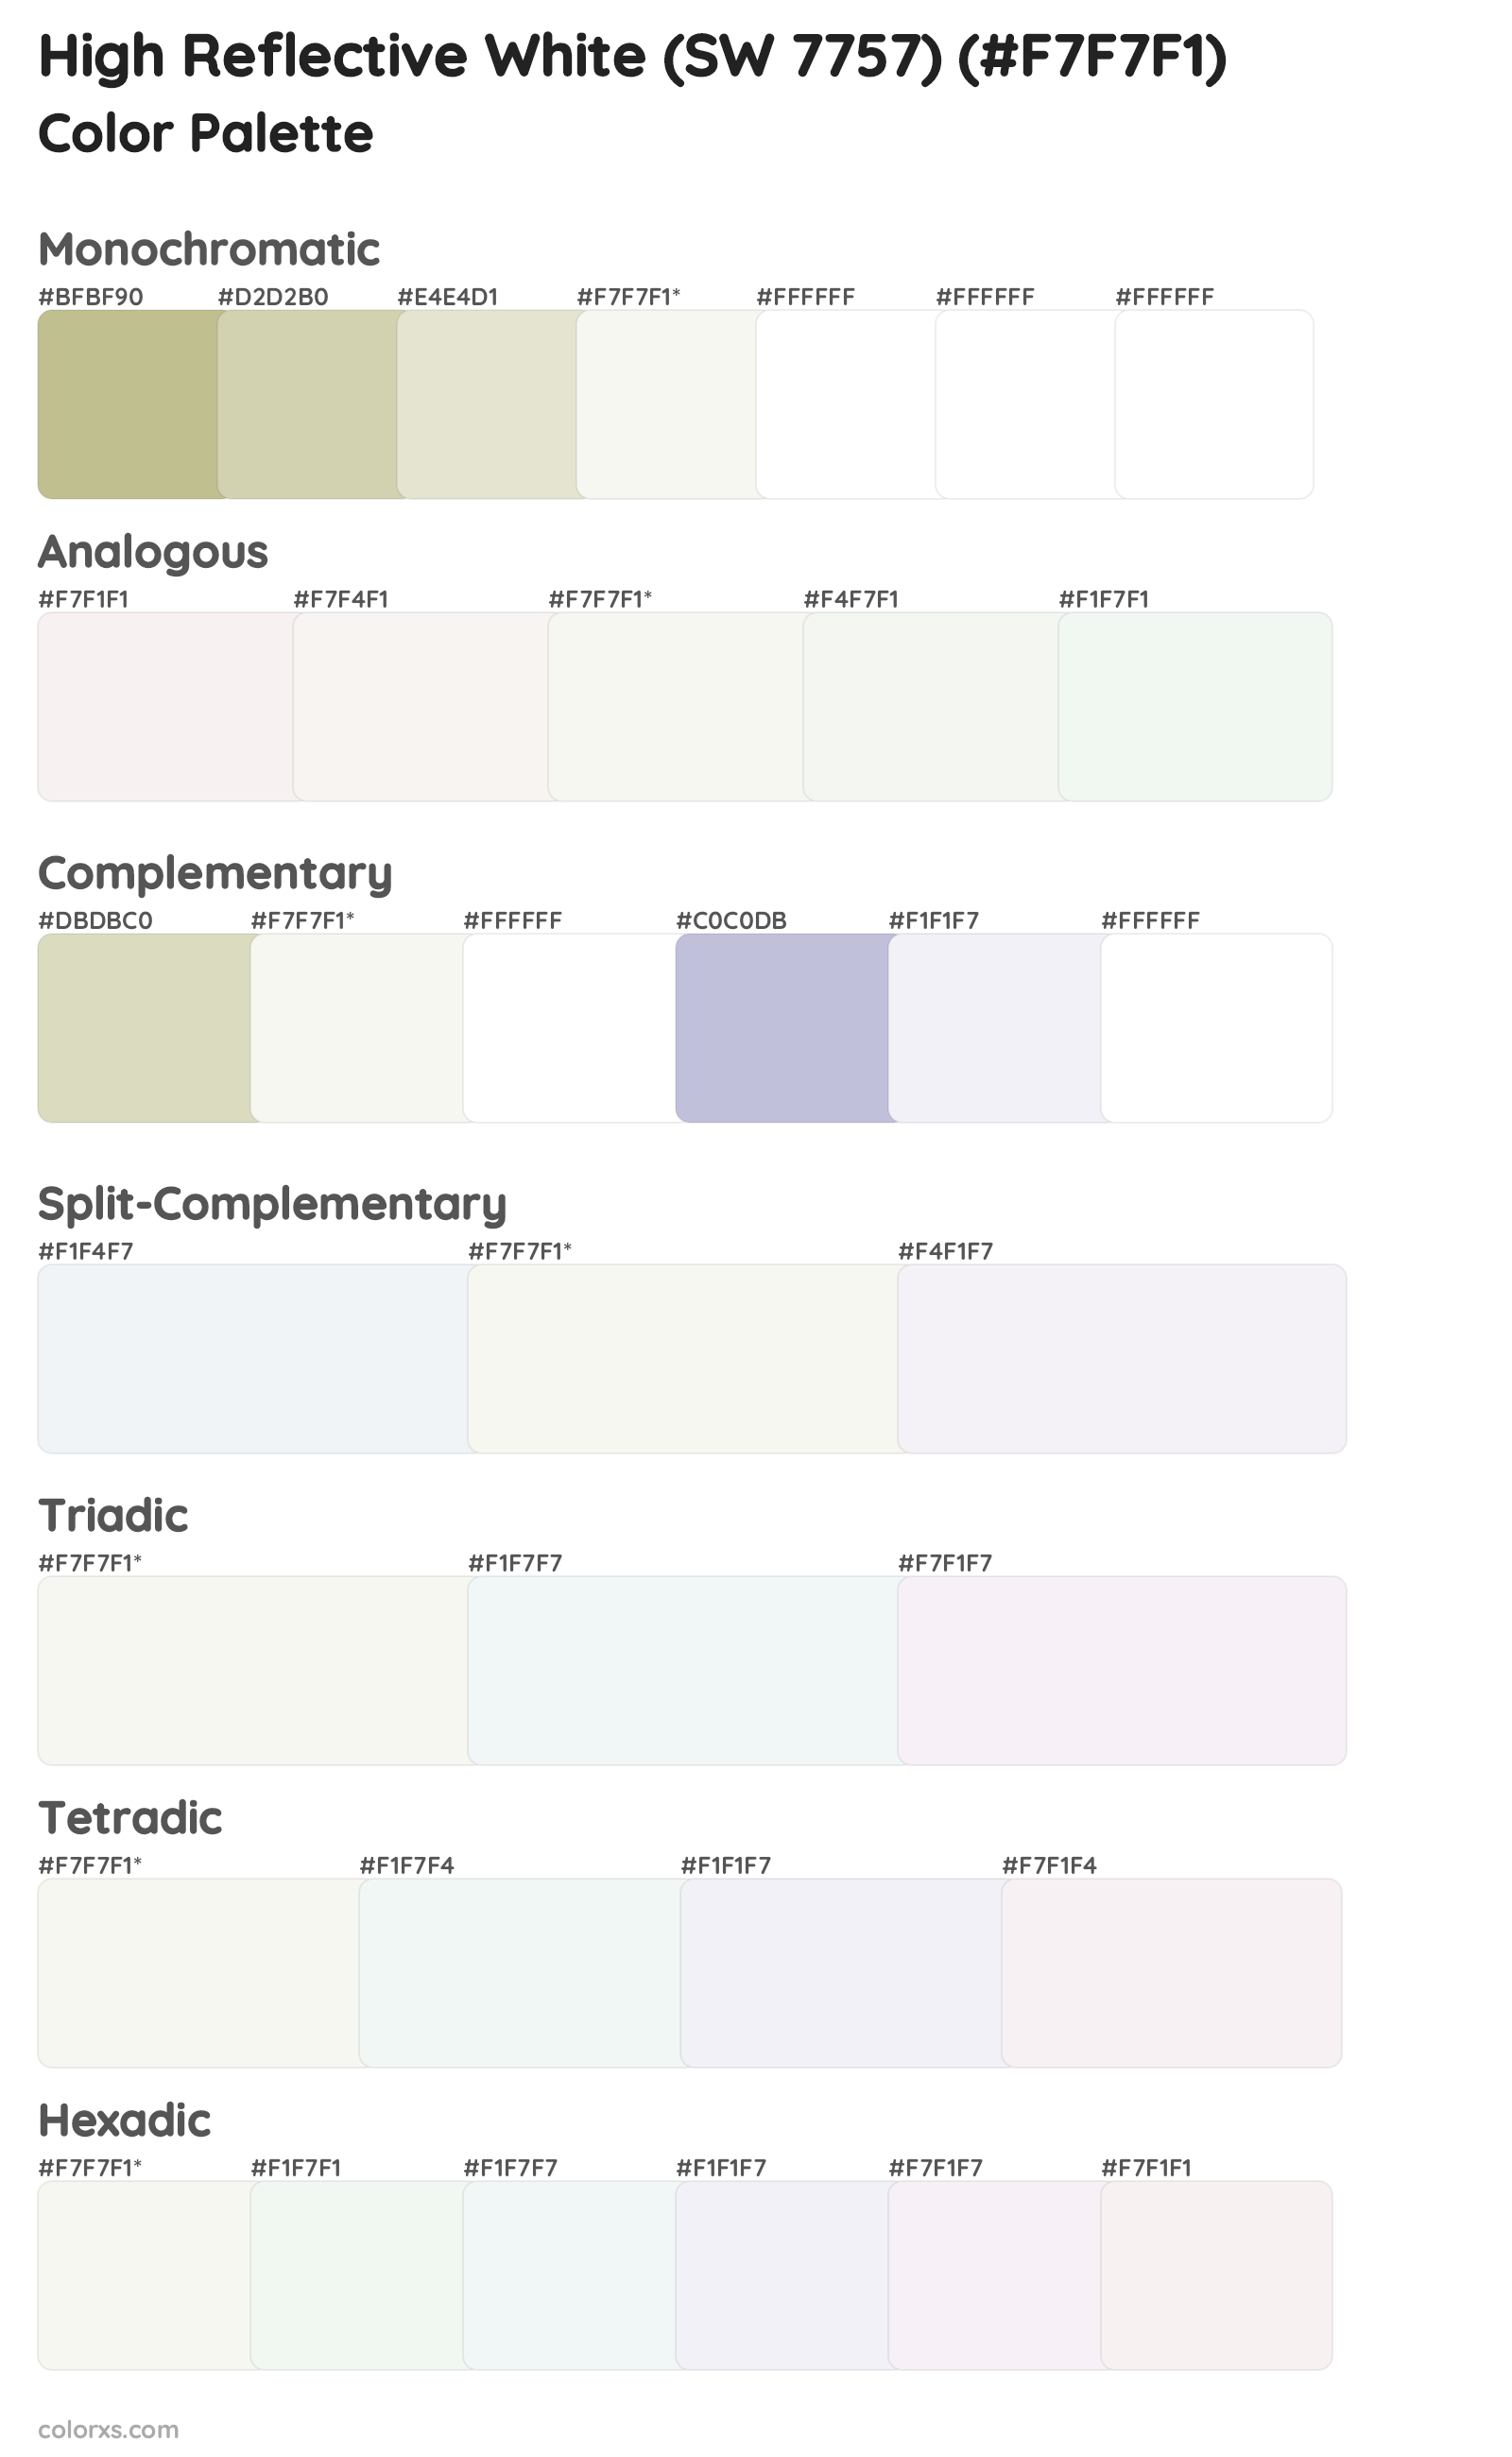 High Reflective White (SW 7757) Color Scheme Palettes